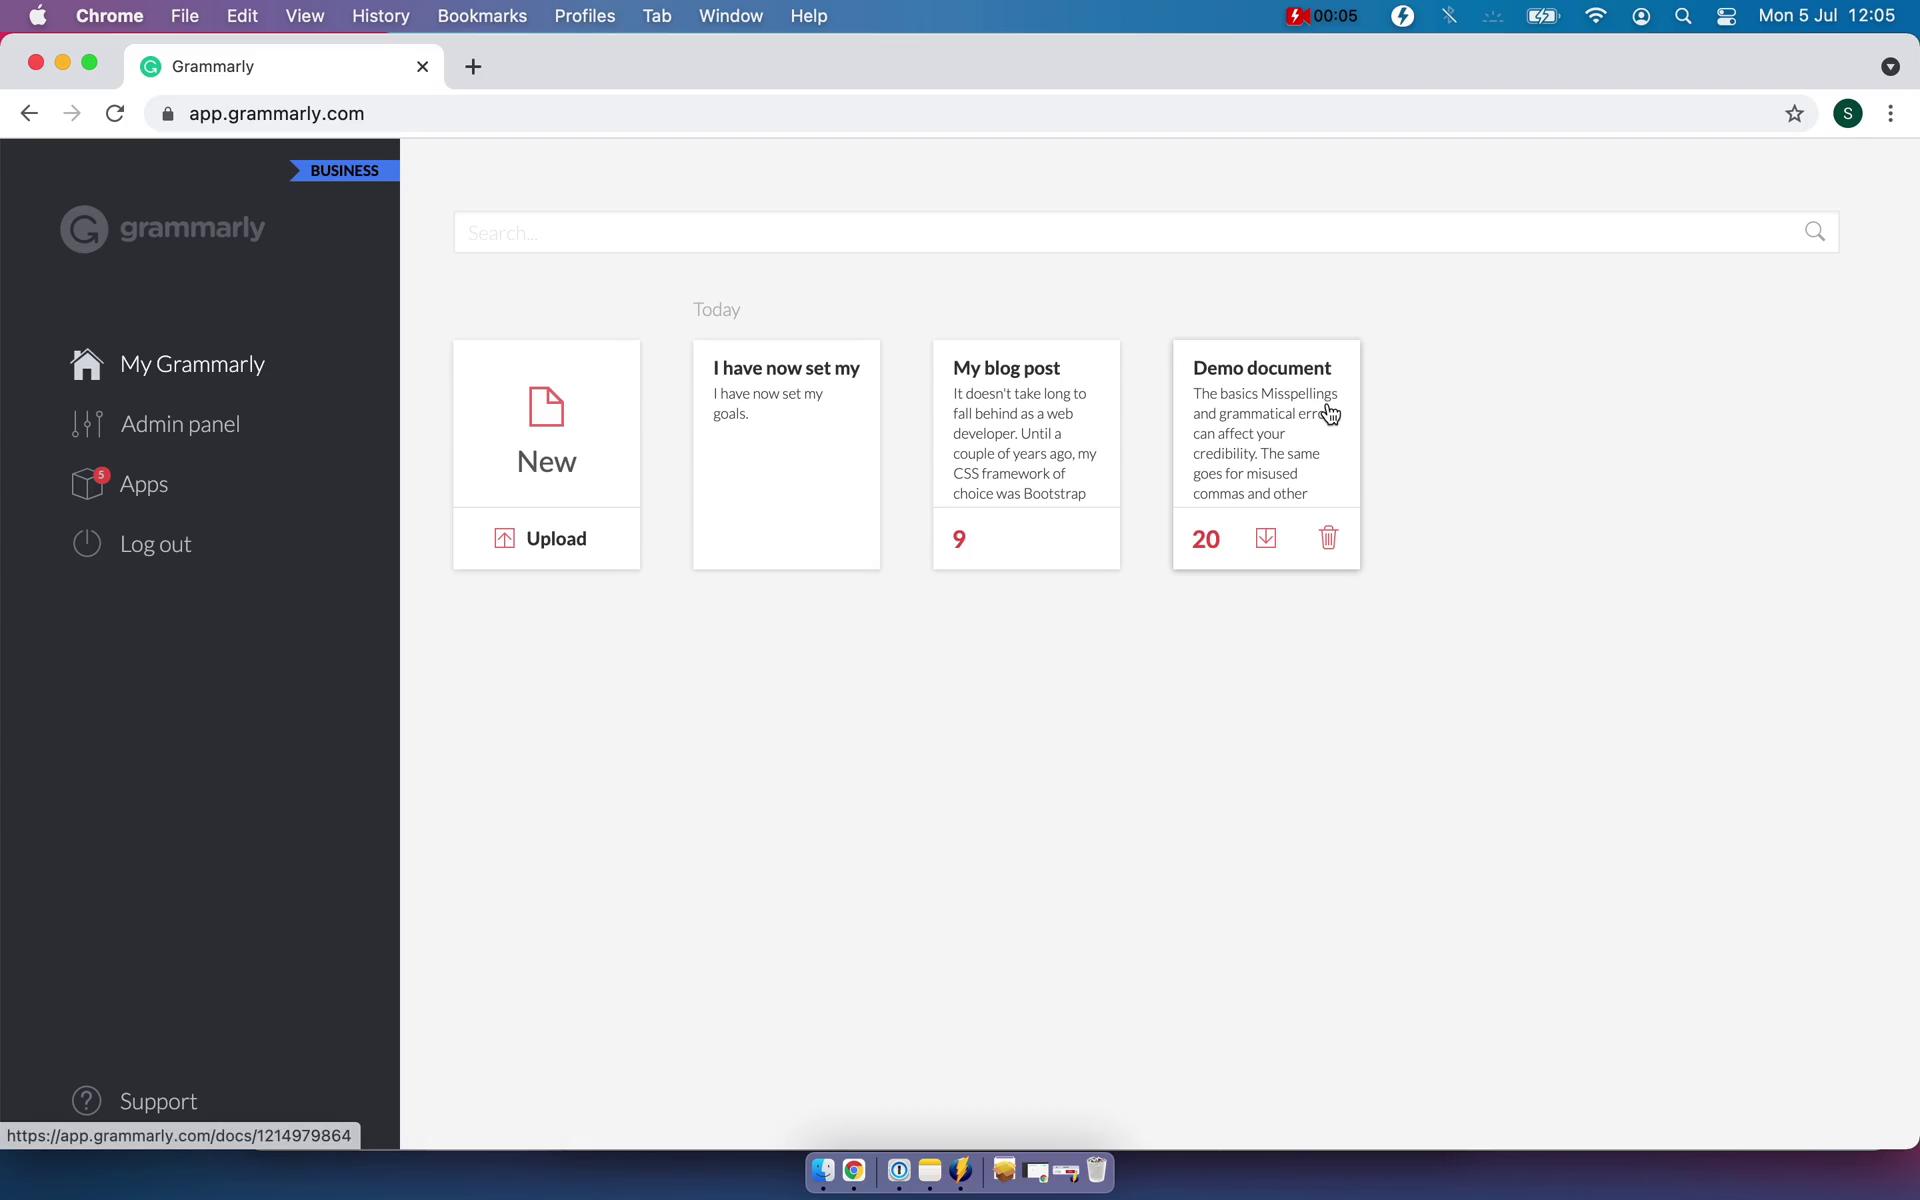 Screenshot of Dashboard on General browsing on Grammarly user flow